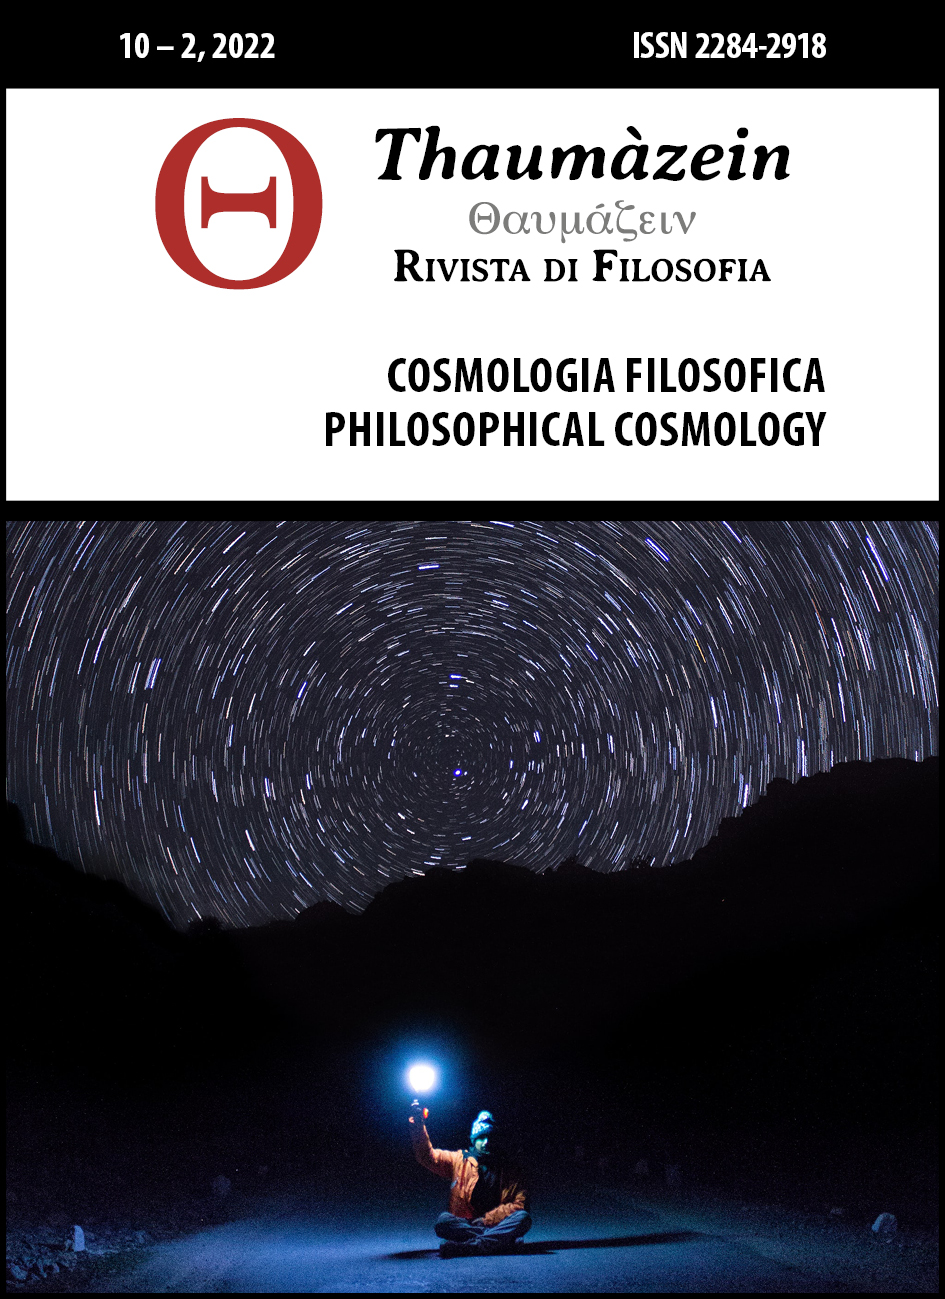 					View Vol. 10 No. 2 (2022): Cosmologia filosofica / Philosophical Cosmology
				